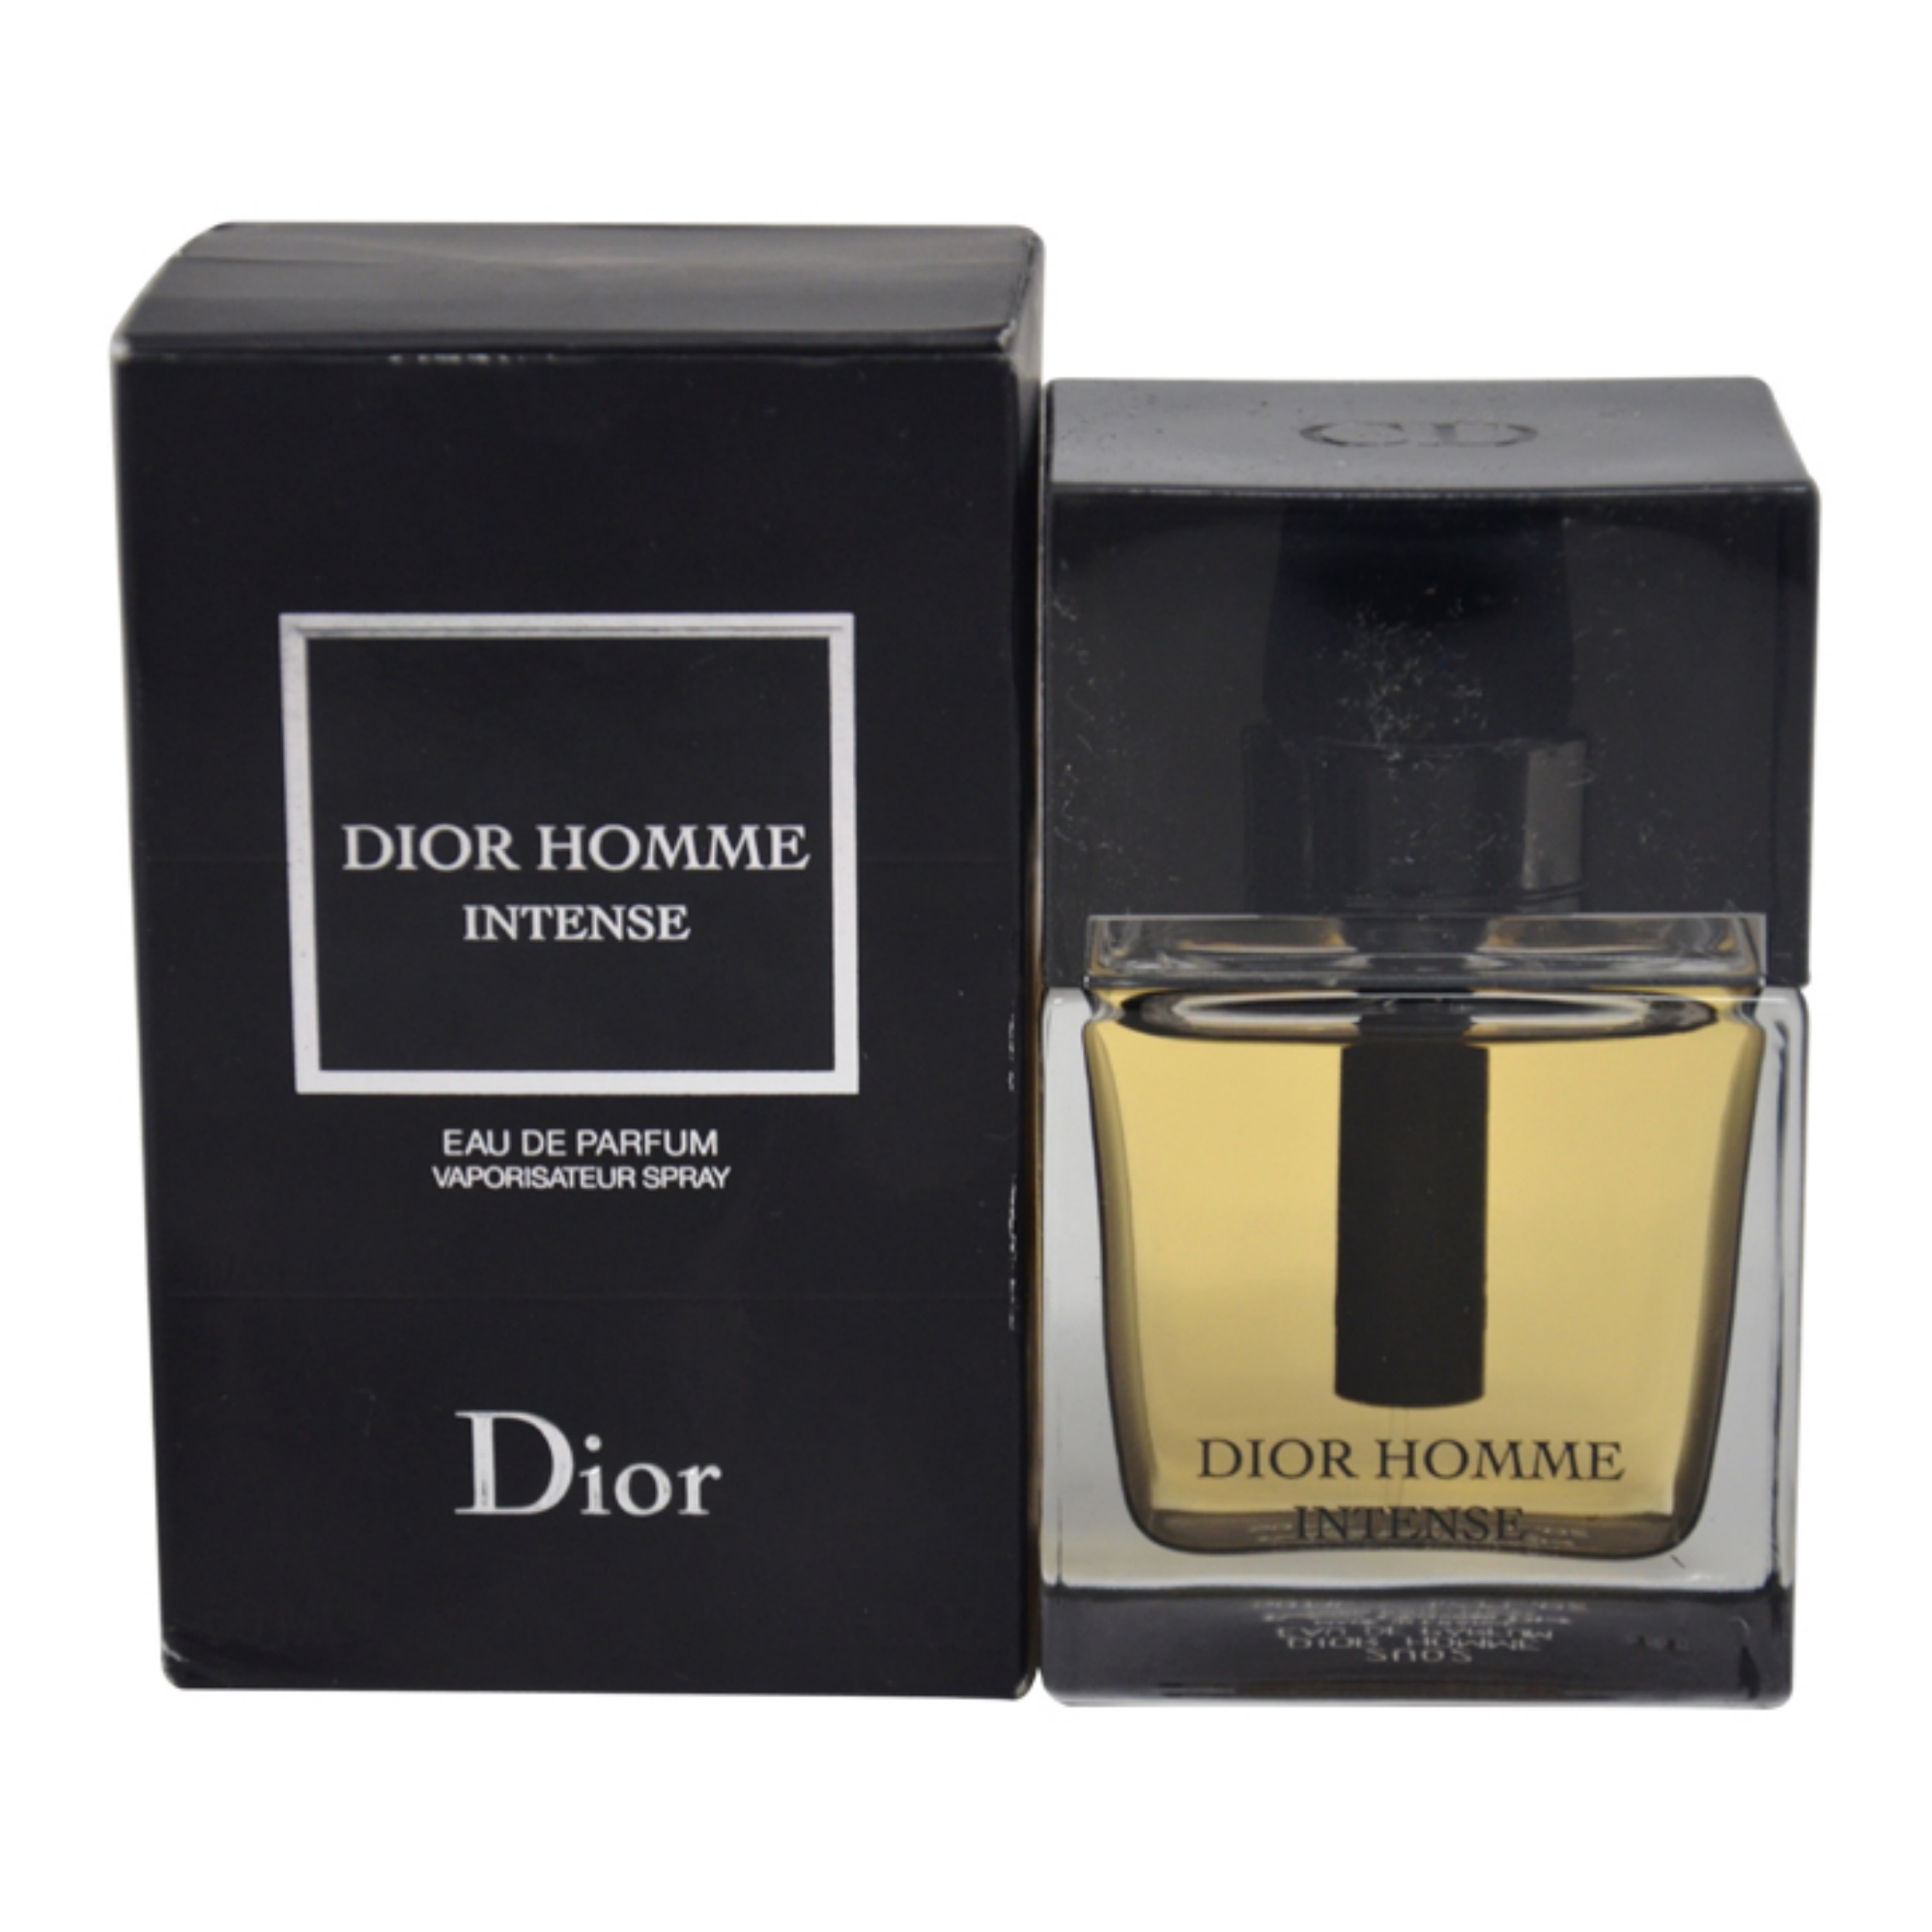 DIOR HOMME INTENSE by Christian Dior for Men - 1.7 oz EDP Spray